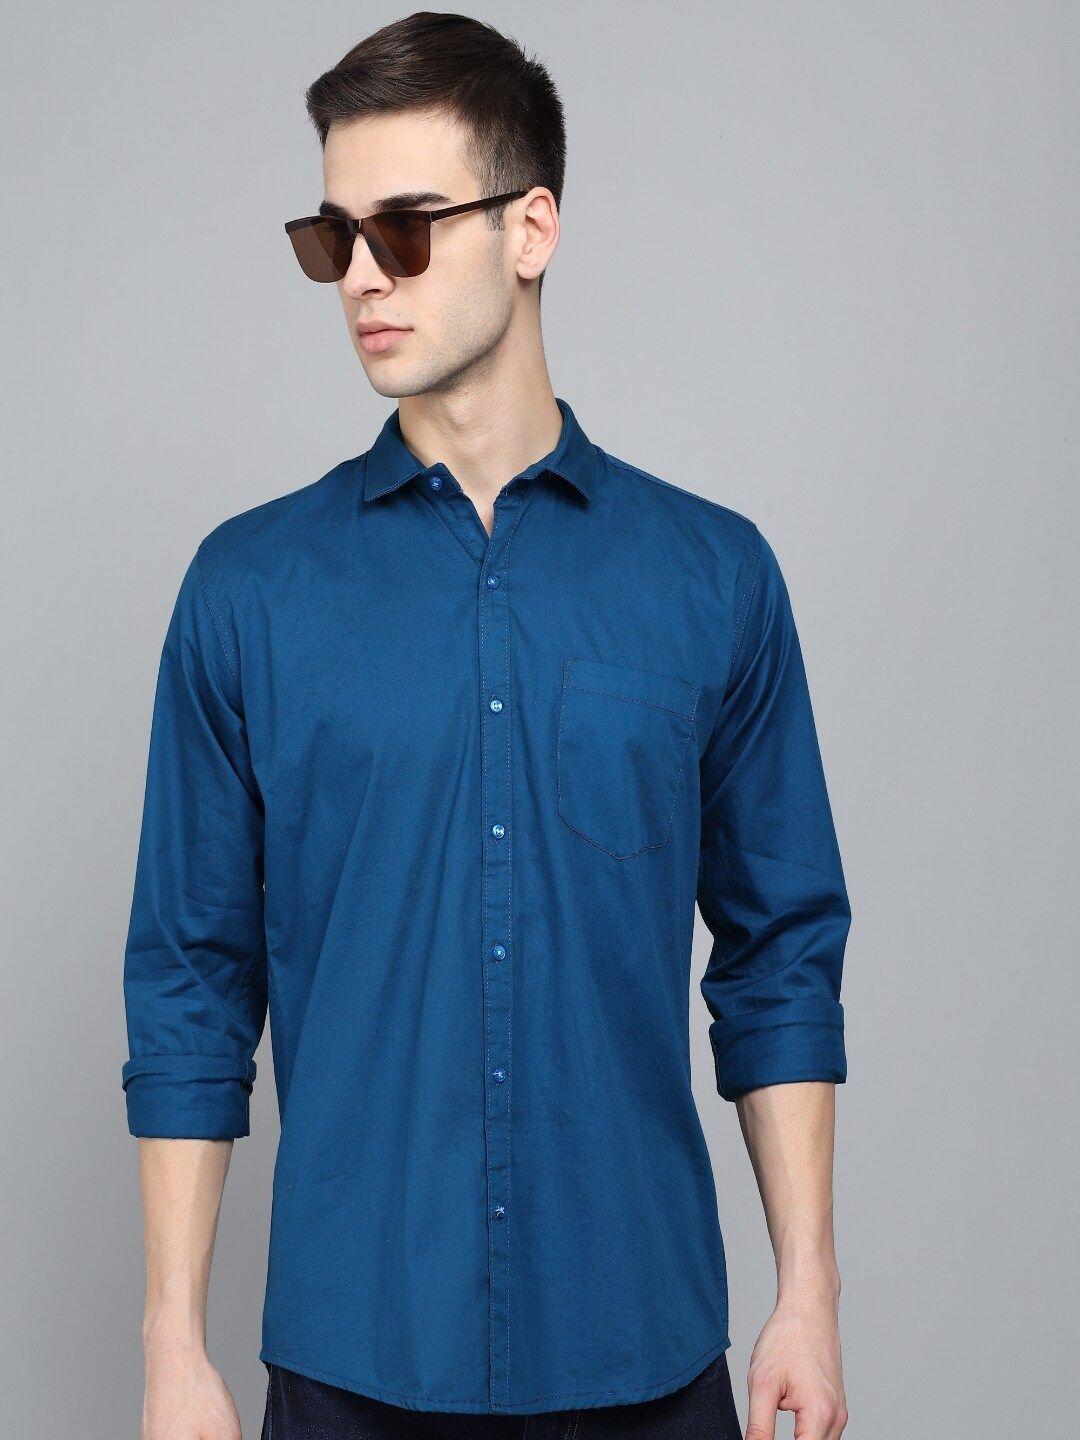 studio nexx men blue standard slim fit opaque casual shirt